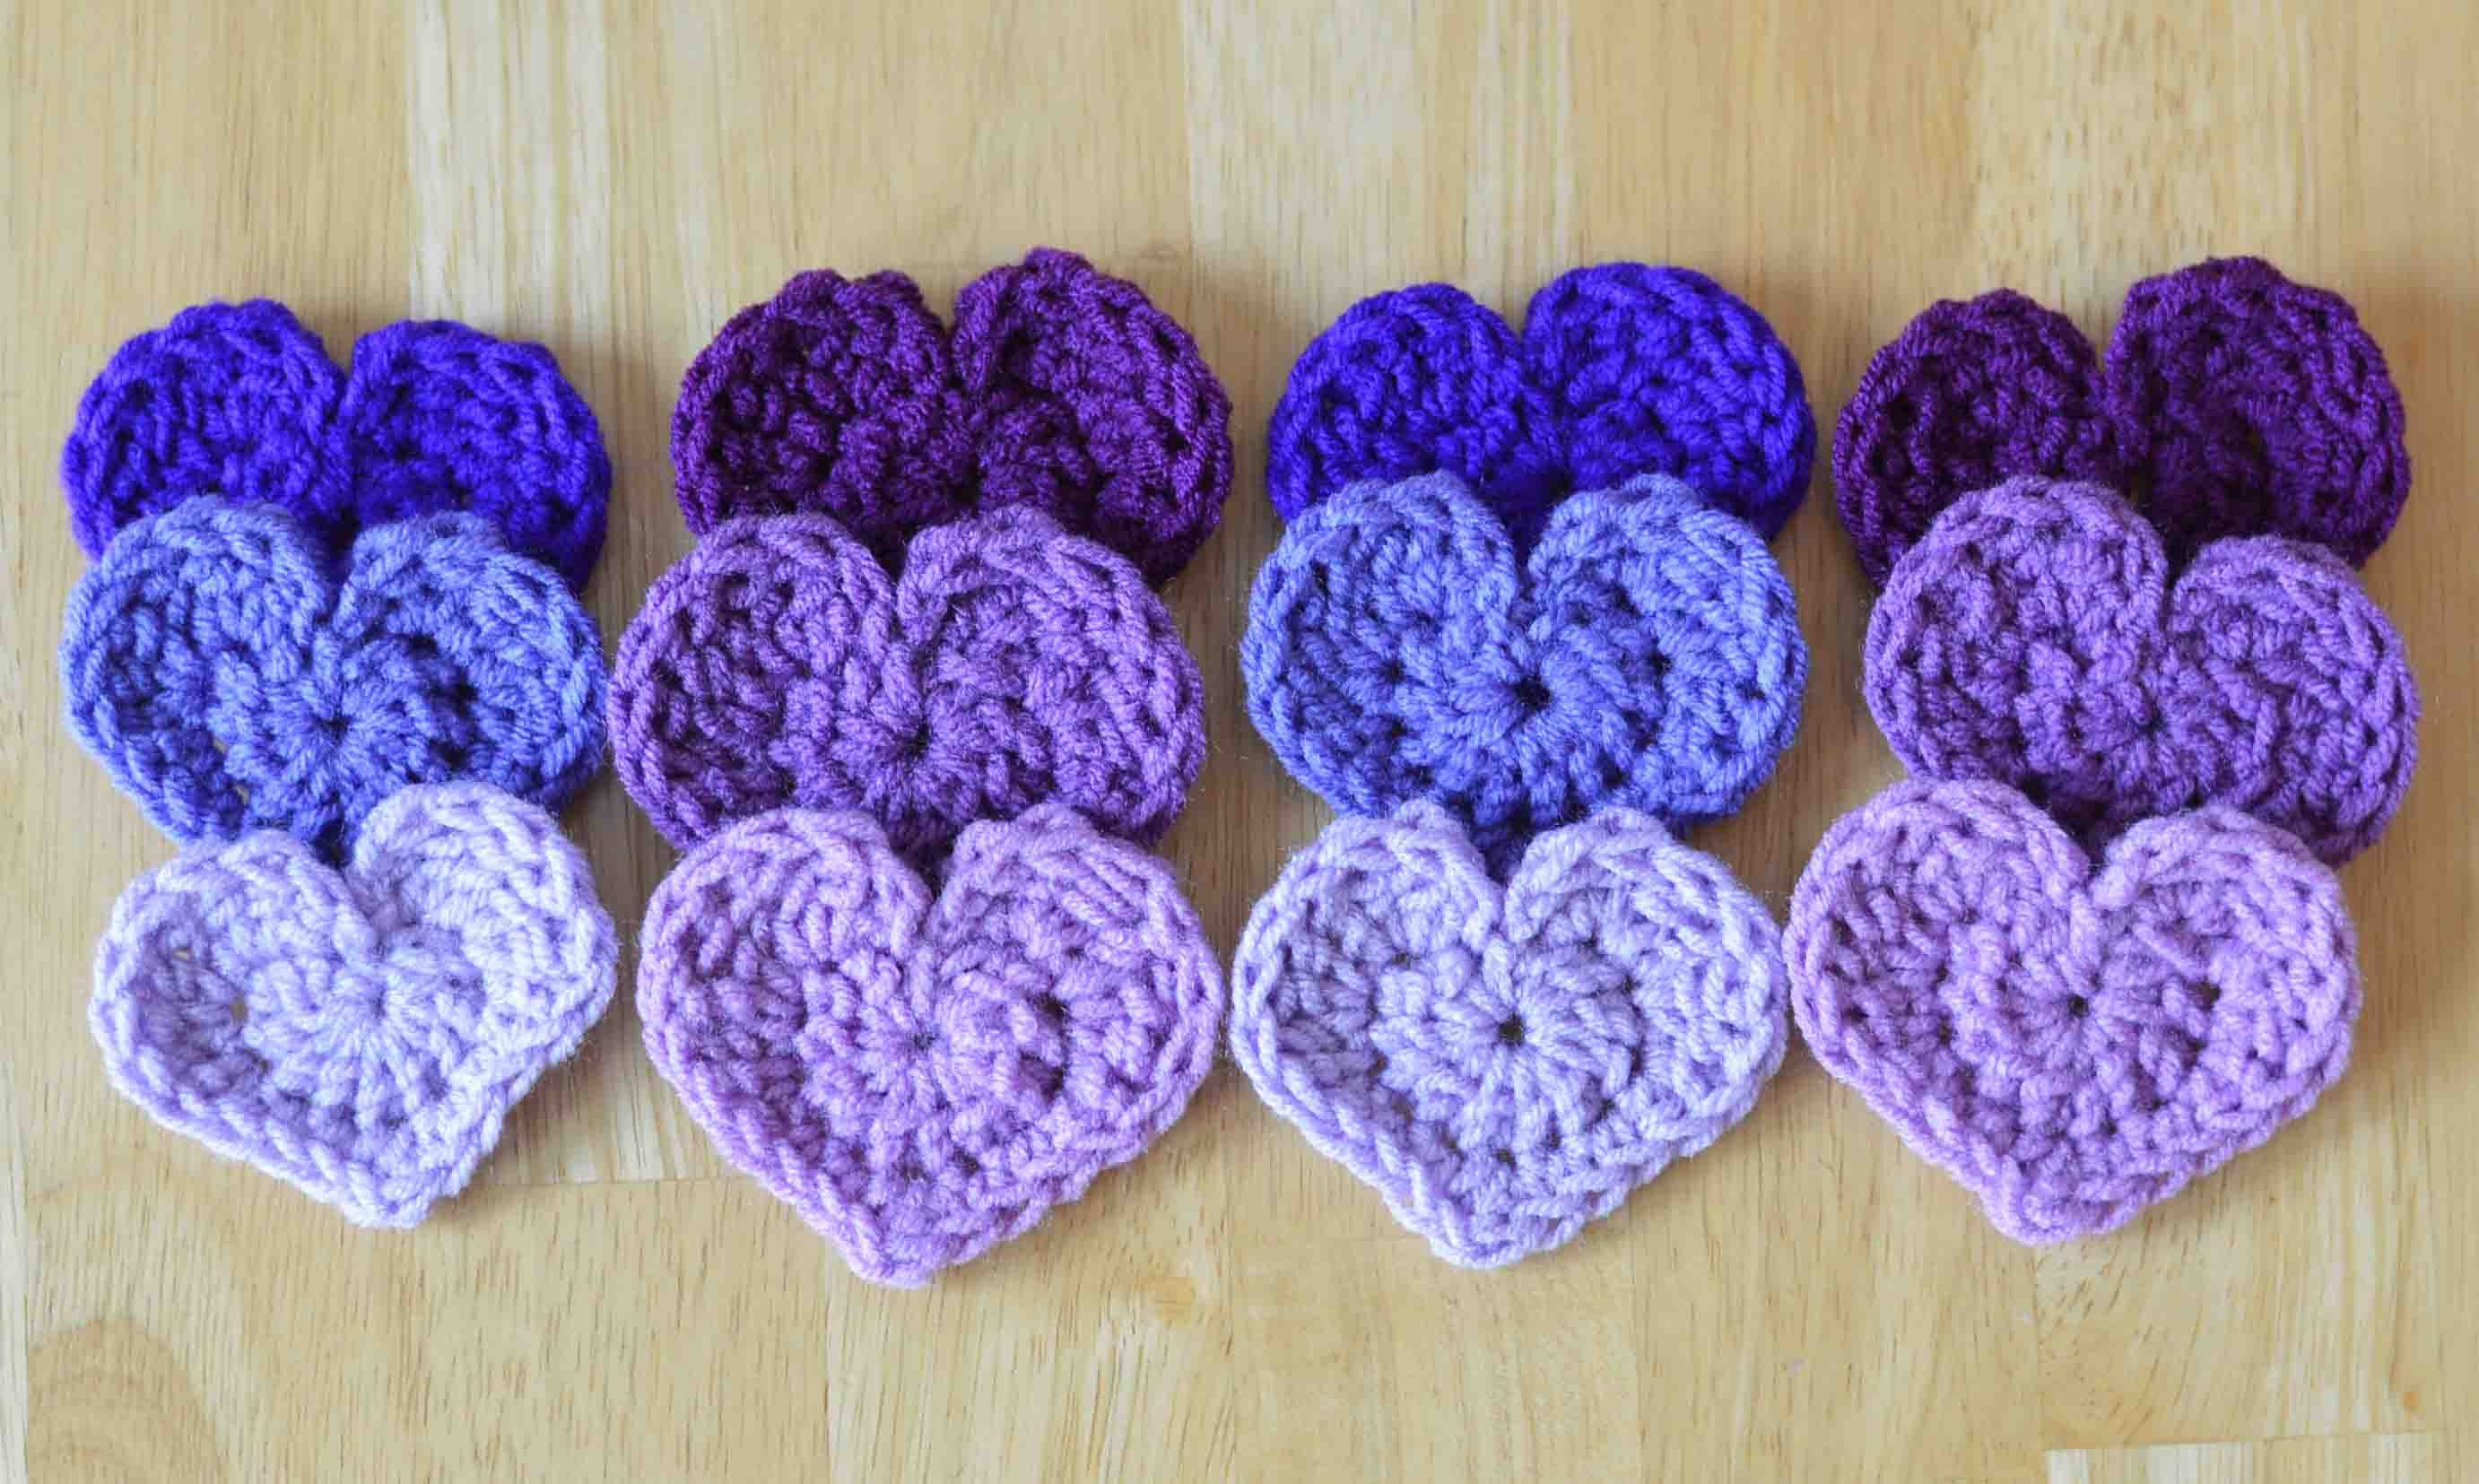 Crochet Heart Patterns The Easiest Heart Crochet Pattern Ever